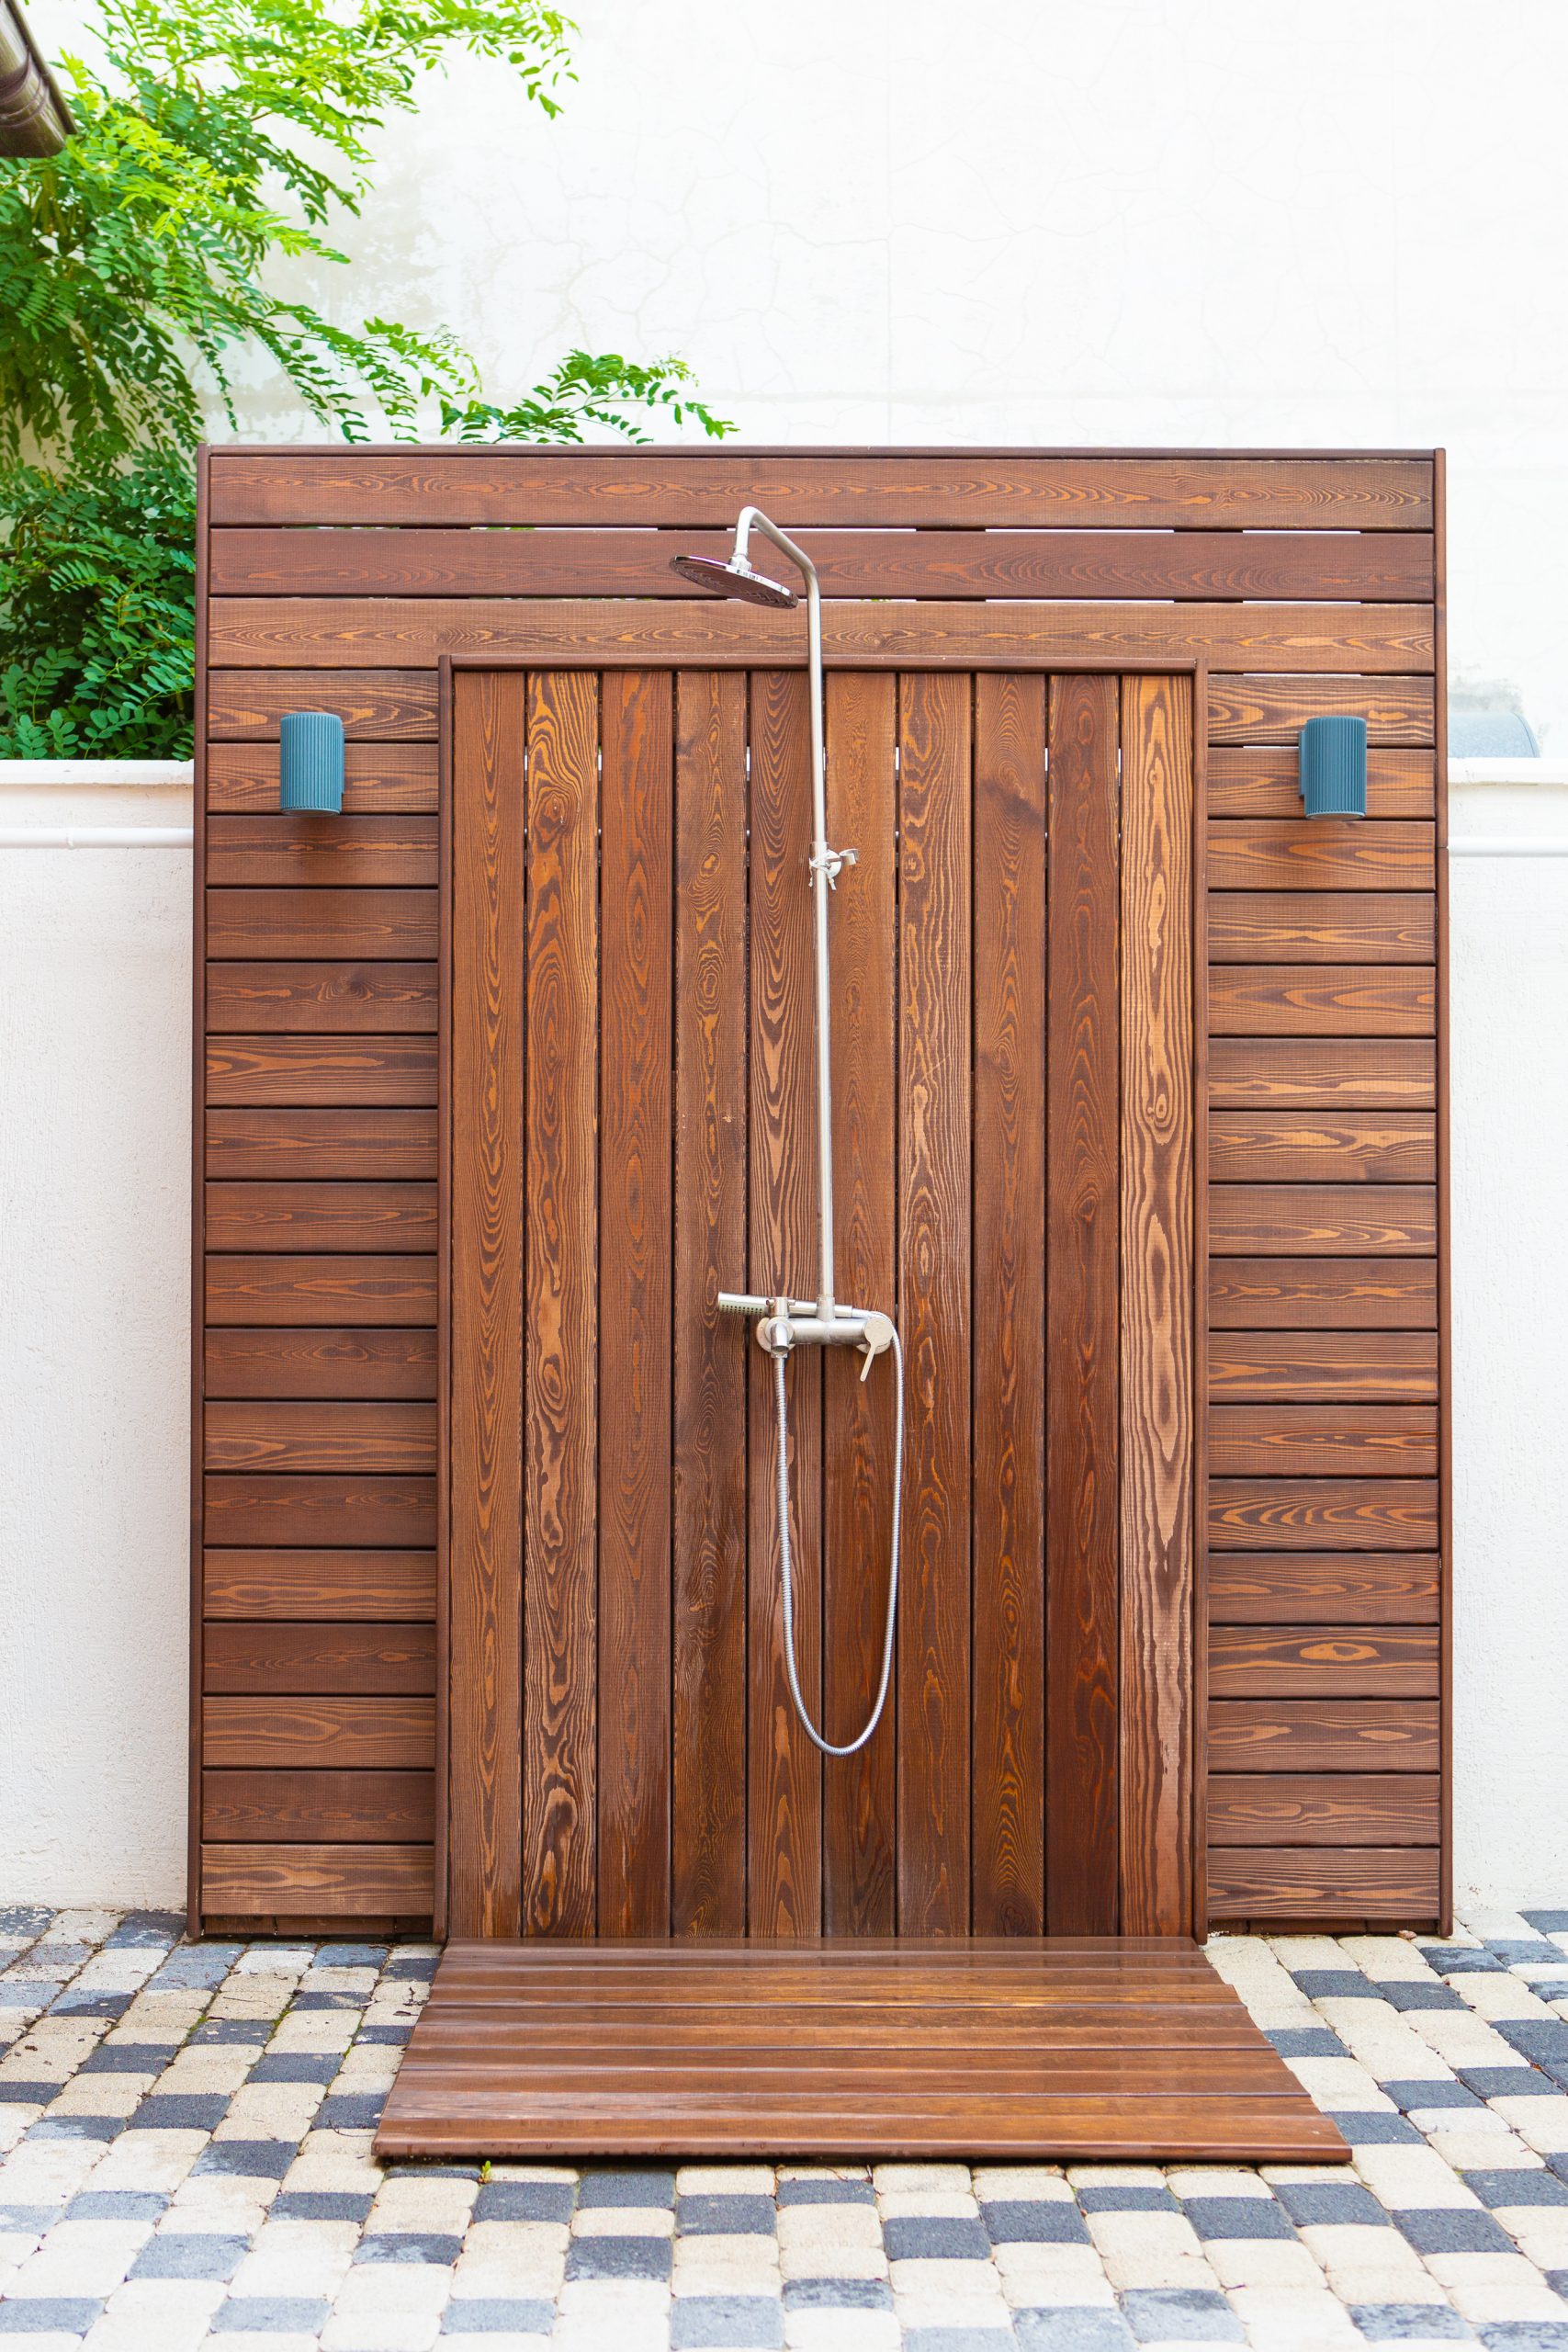 Building an Outdoor Shower: A Definitive DIY Guide